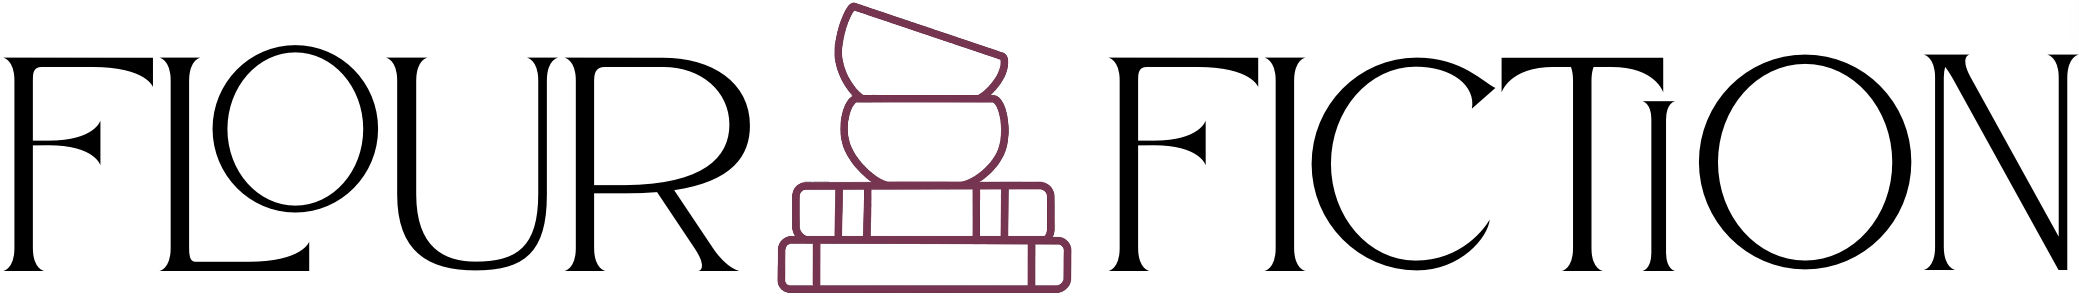 Flour and Fiction site logo